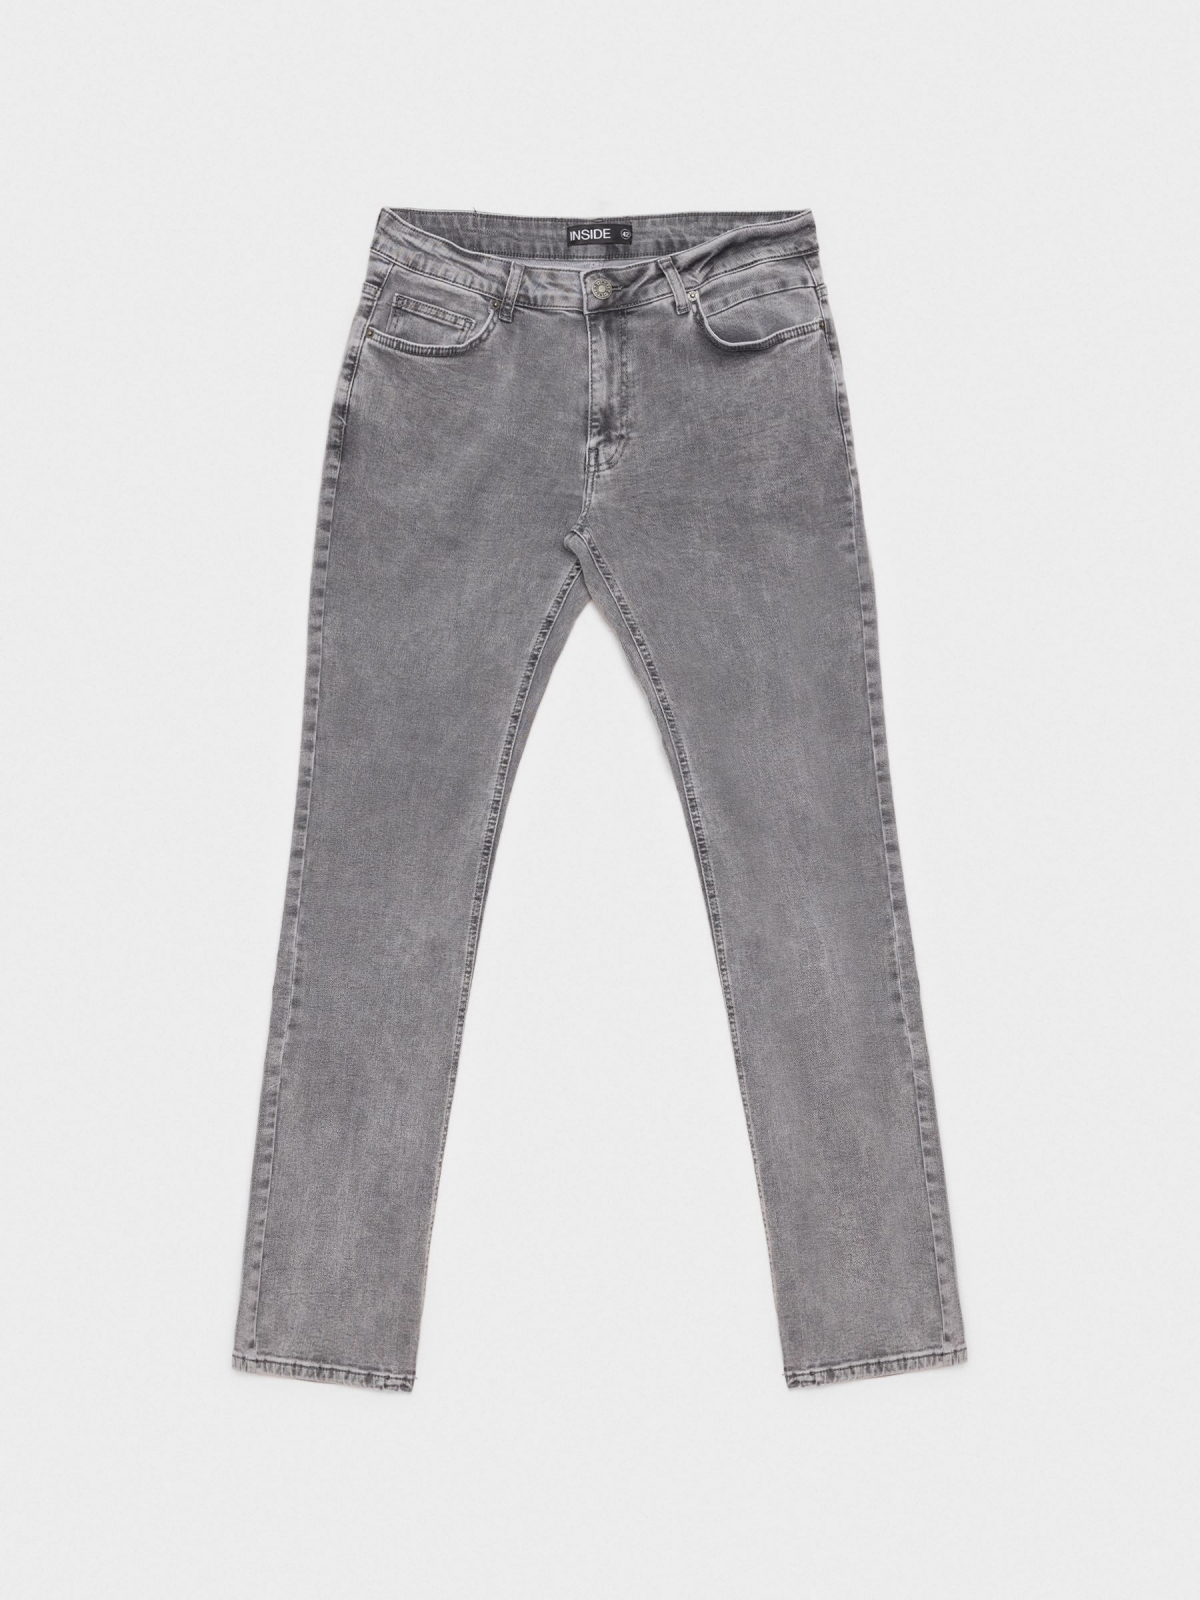  Jeans Regular grises gris oscuro